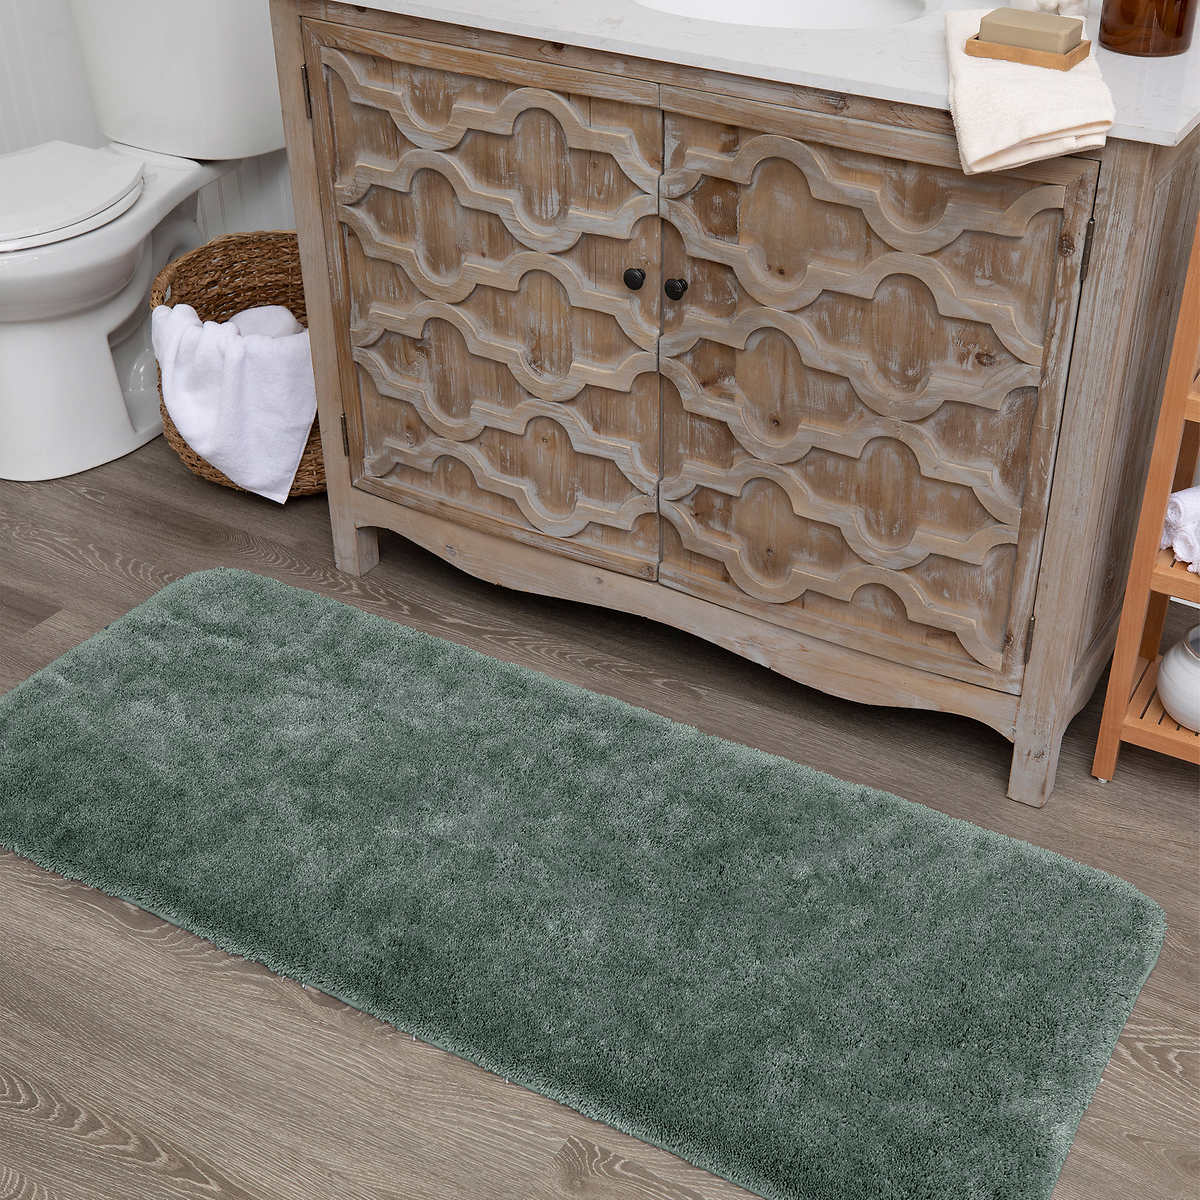 Digital Stamp Pad Bathroom Kitchen Bathroom Sink Mat Print Carpet Pad Door Mat 